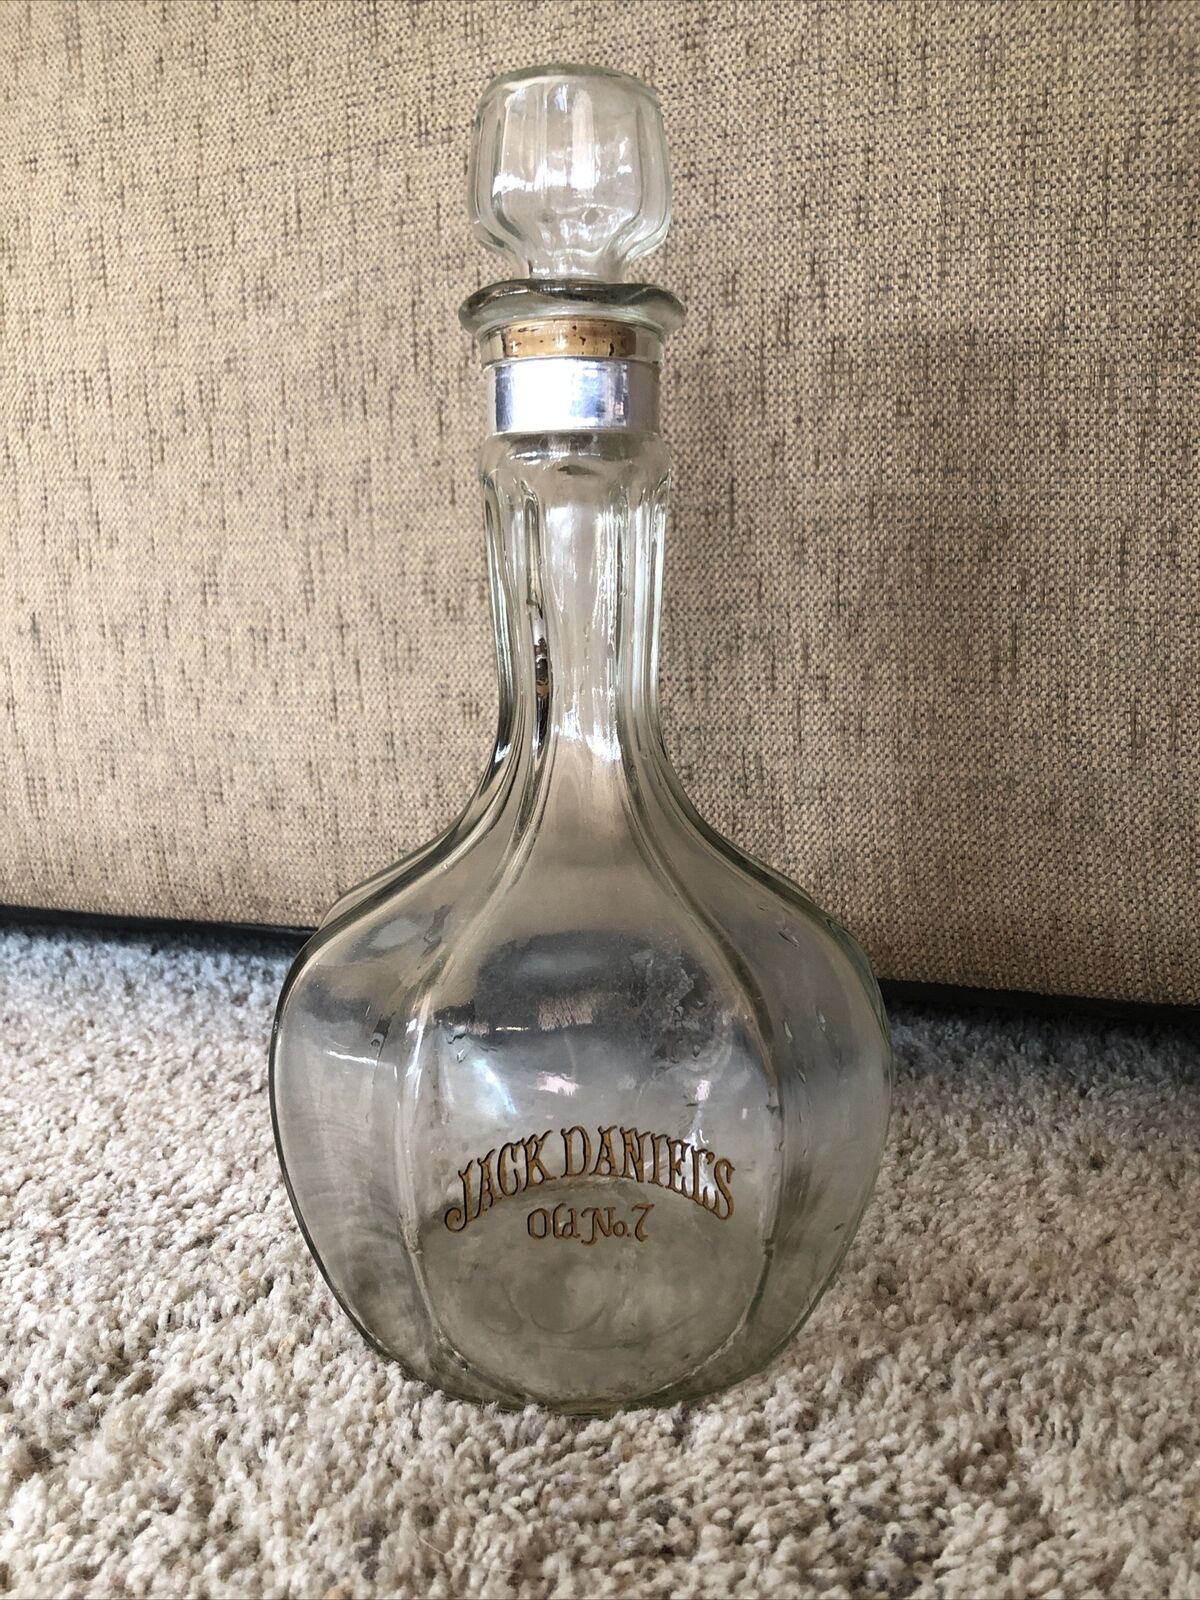 Jack Daniels Old no 7, Vintage Commemorative Decanter